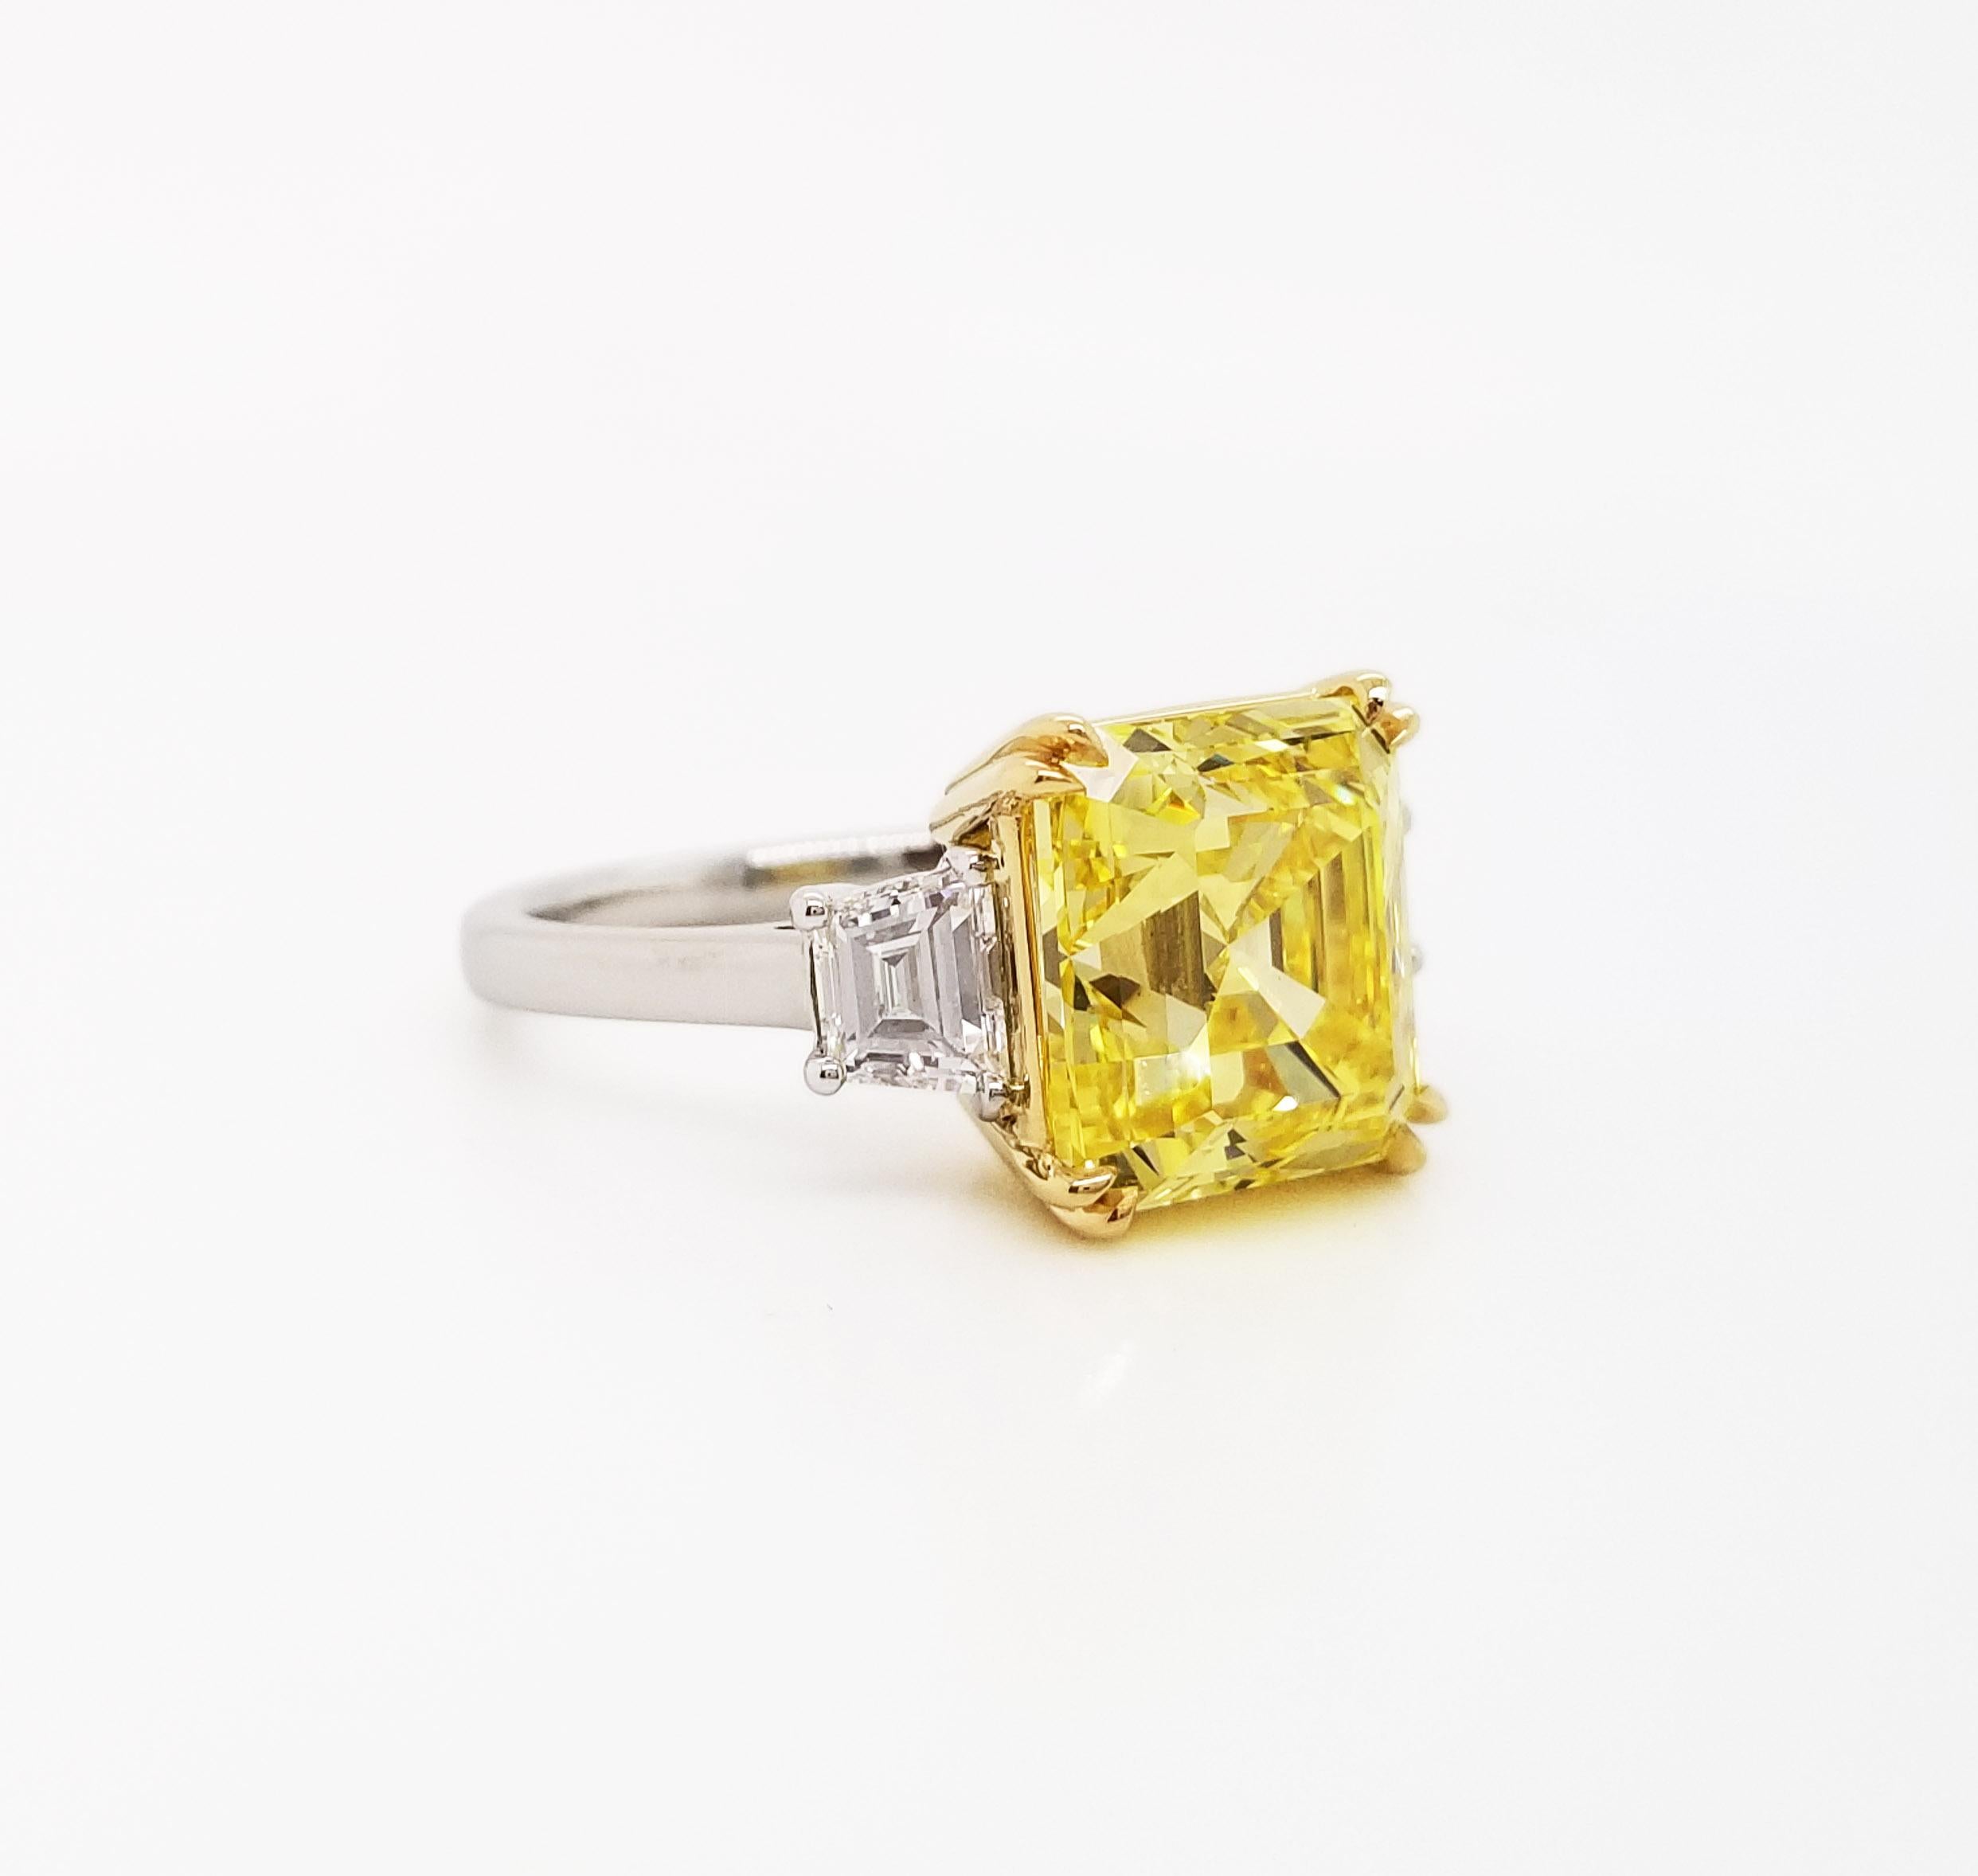 Scarselli 6 Carat Fancy Vivid Yellow Emerald Cut Diamond Ring in Platinum 3